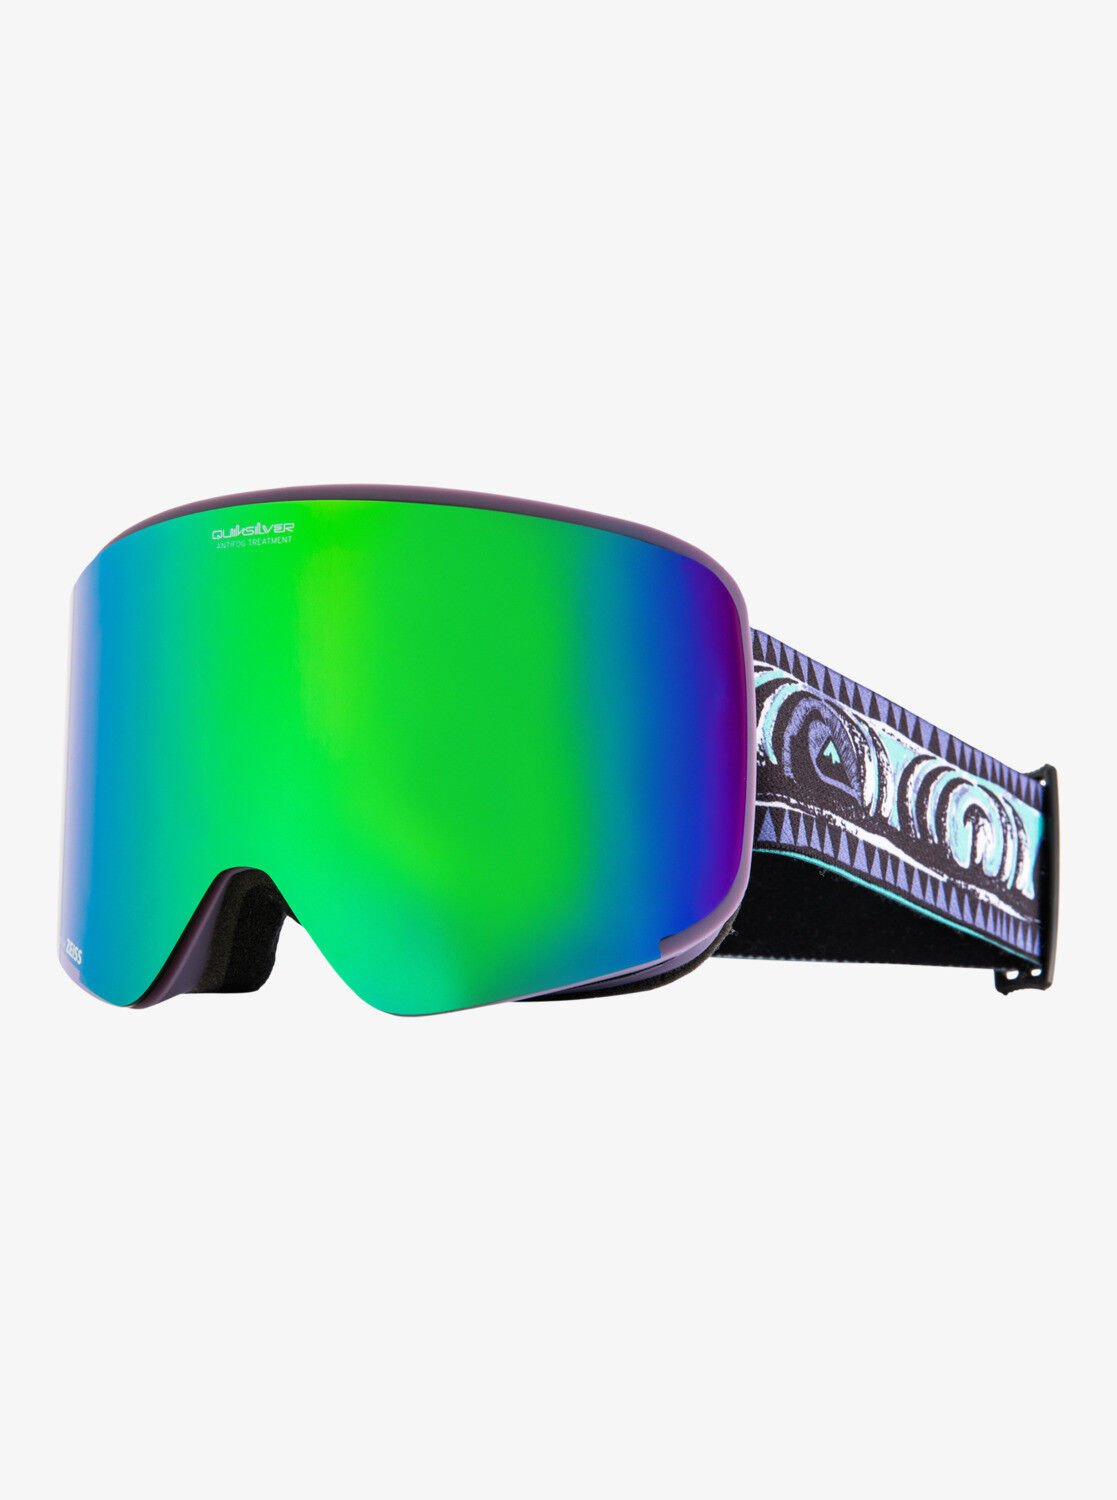 Quiksilver Switchback Asweetin - Ski goggles - Men's | Hardloop